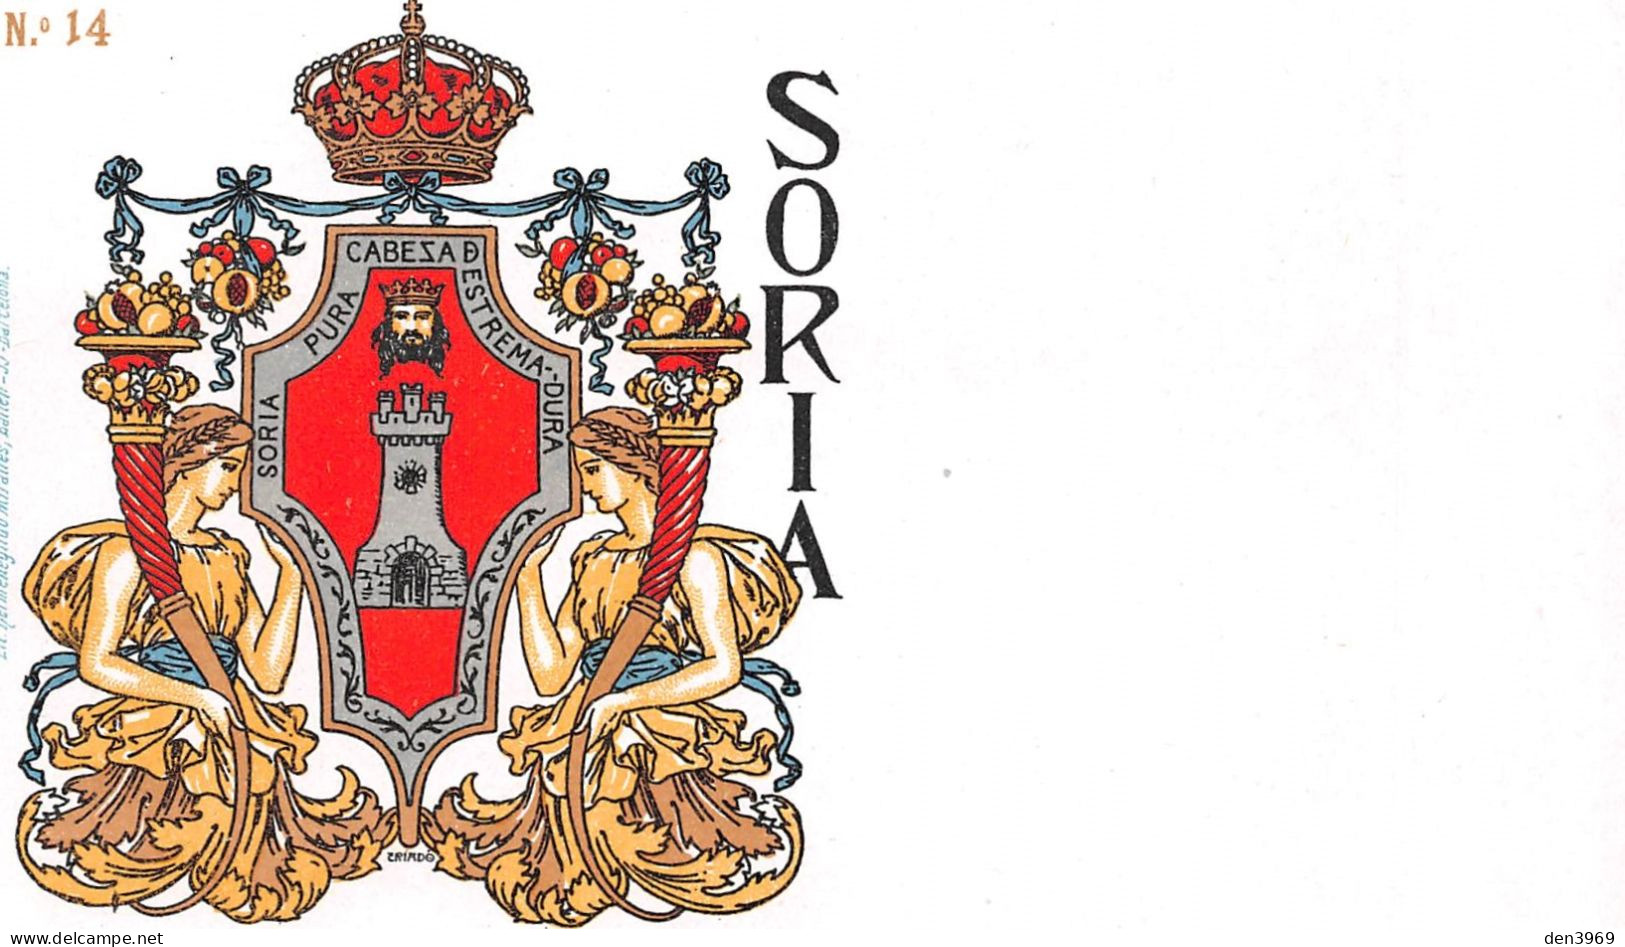 Espagne - SORIA Par Eriado - Escudo De Armas, Armoiries - Lith. Hermenegildo Miralles, Barcelona N'14 - Précurseur - Soria